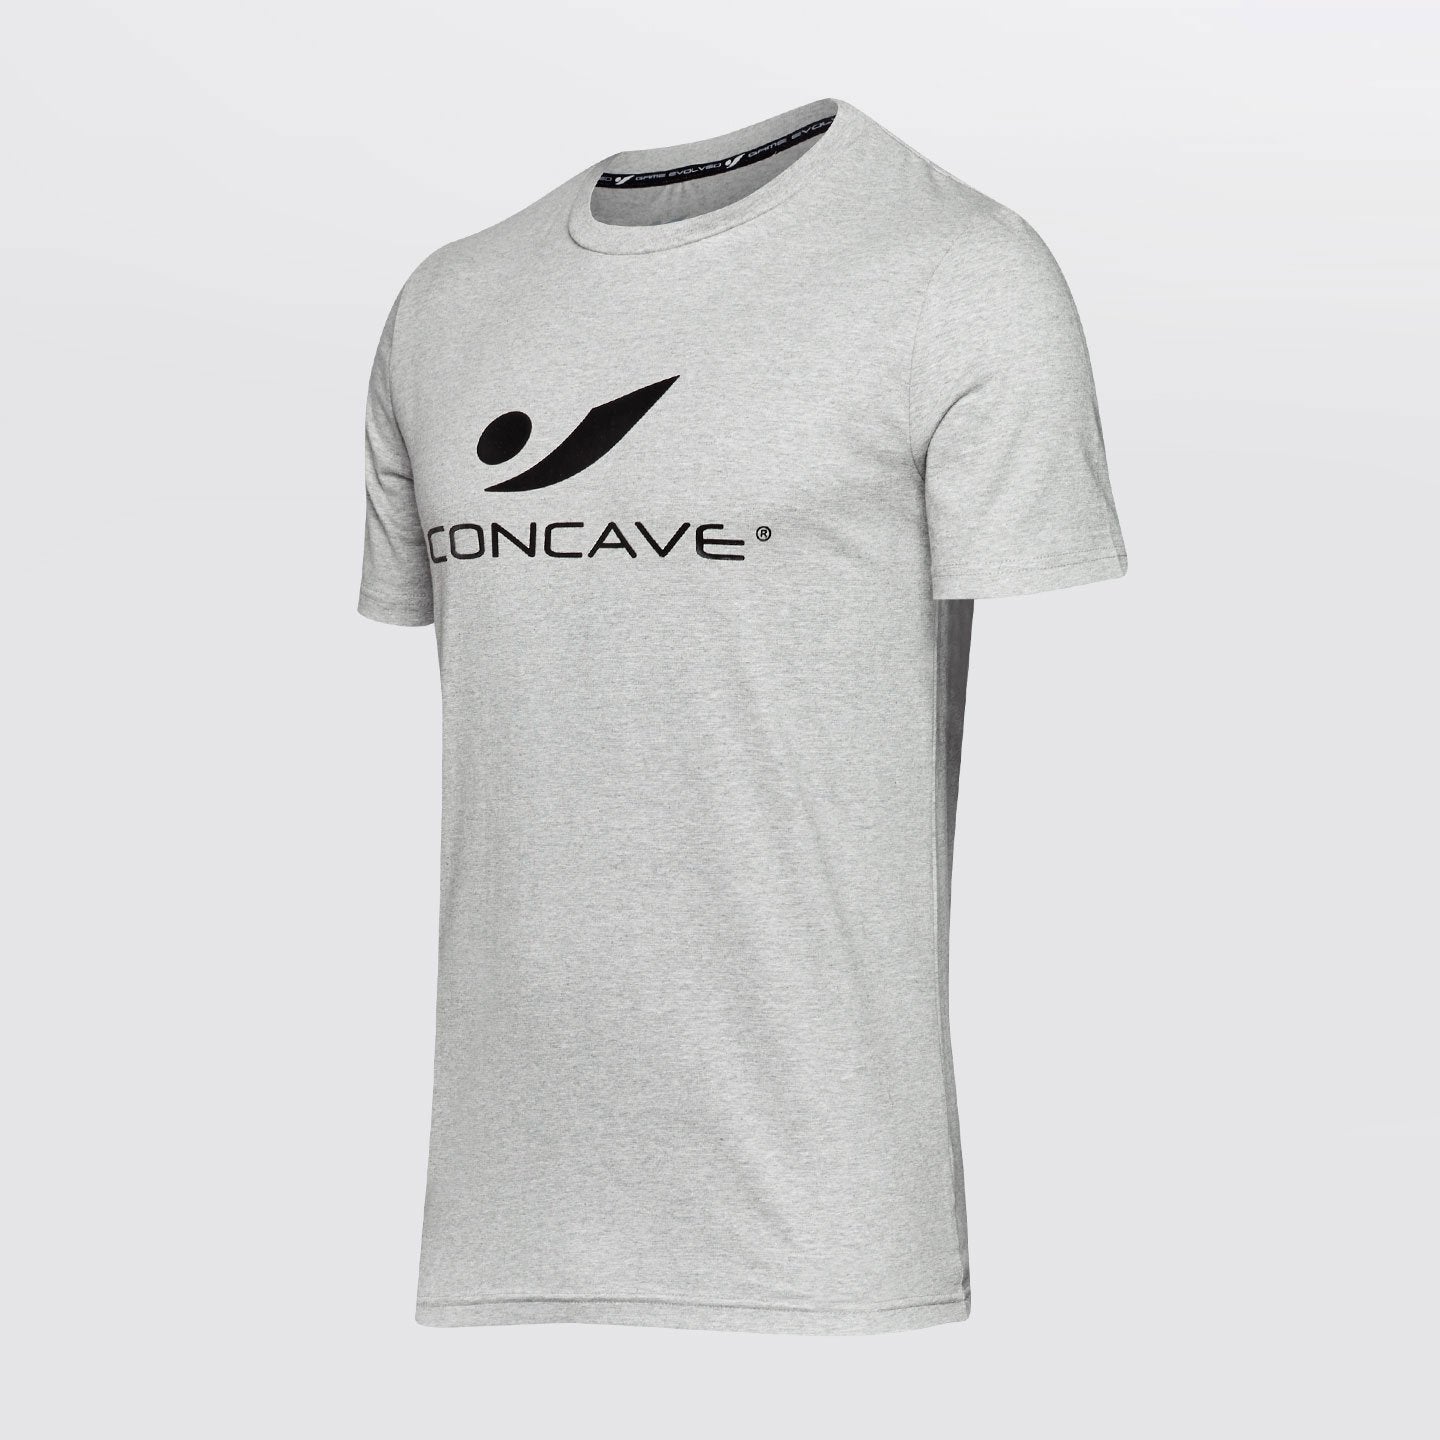 Concave T-Shirt - Grey/Black